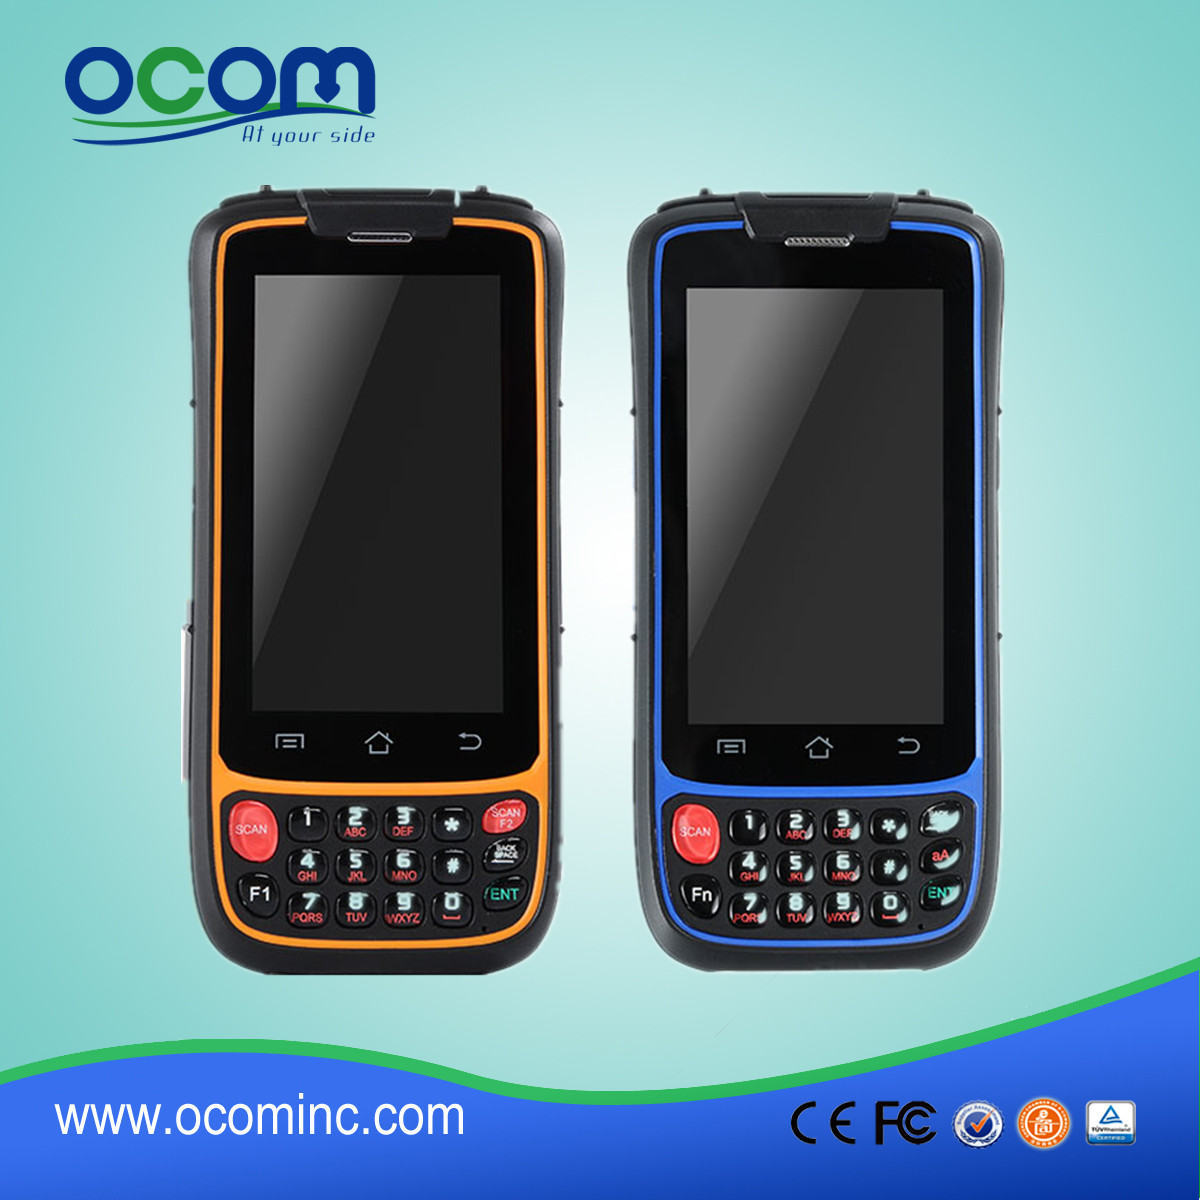 OCBS-D7000 Android Handheld-Daten-Terminal PDA